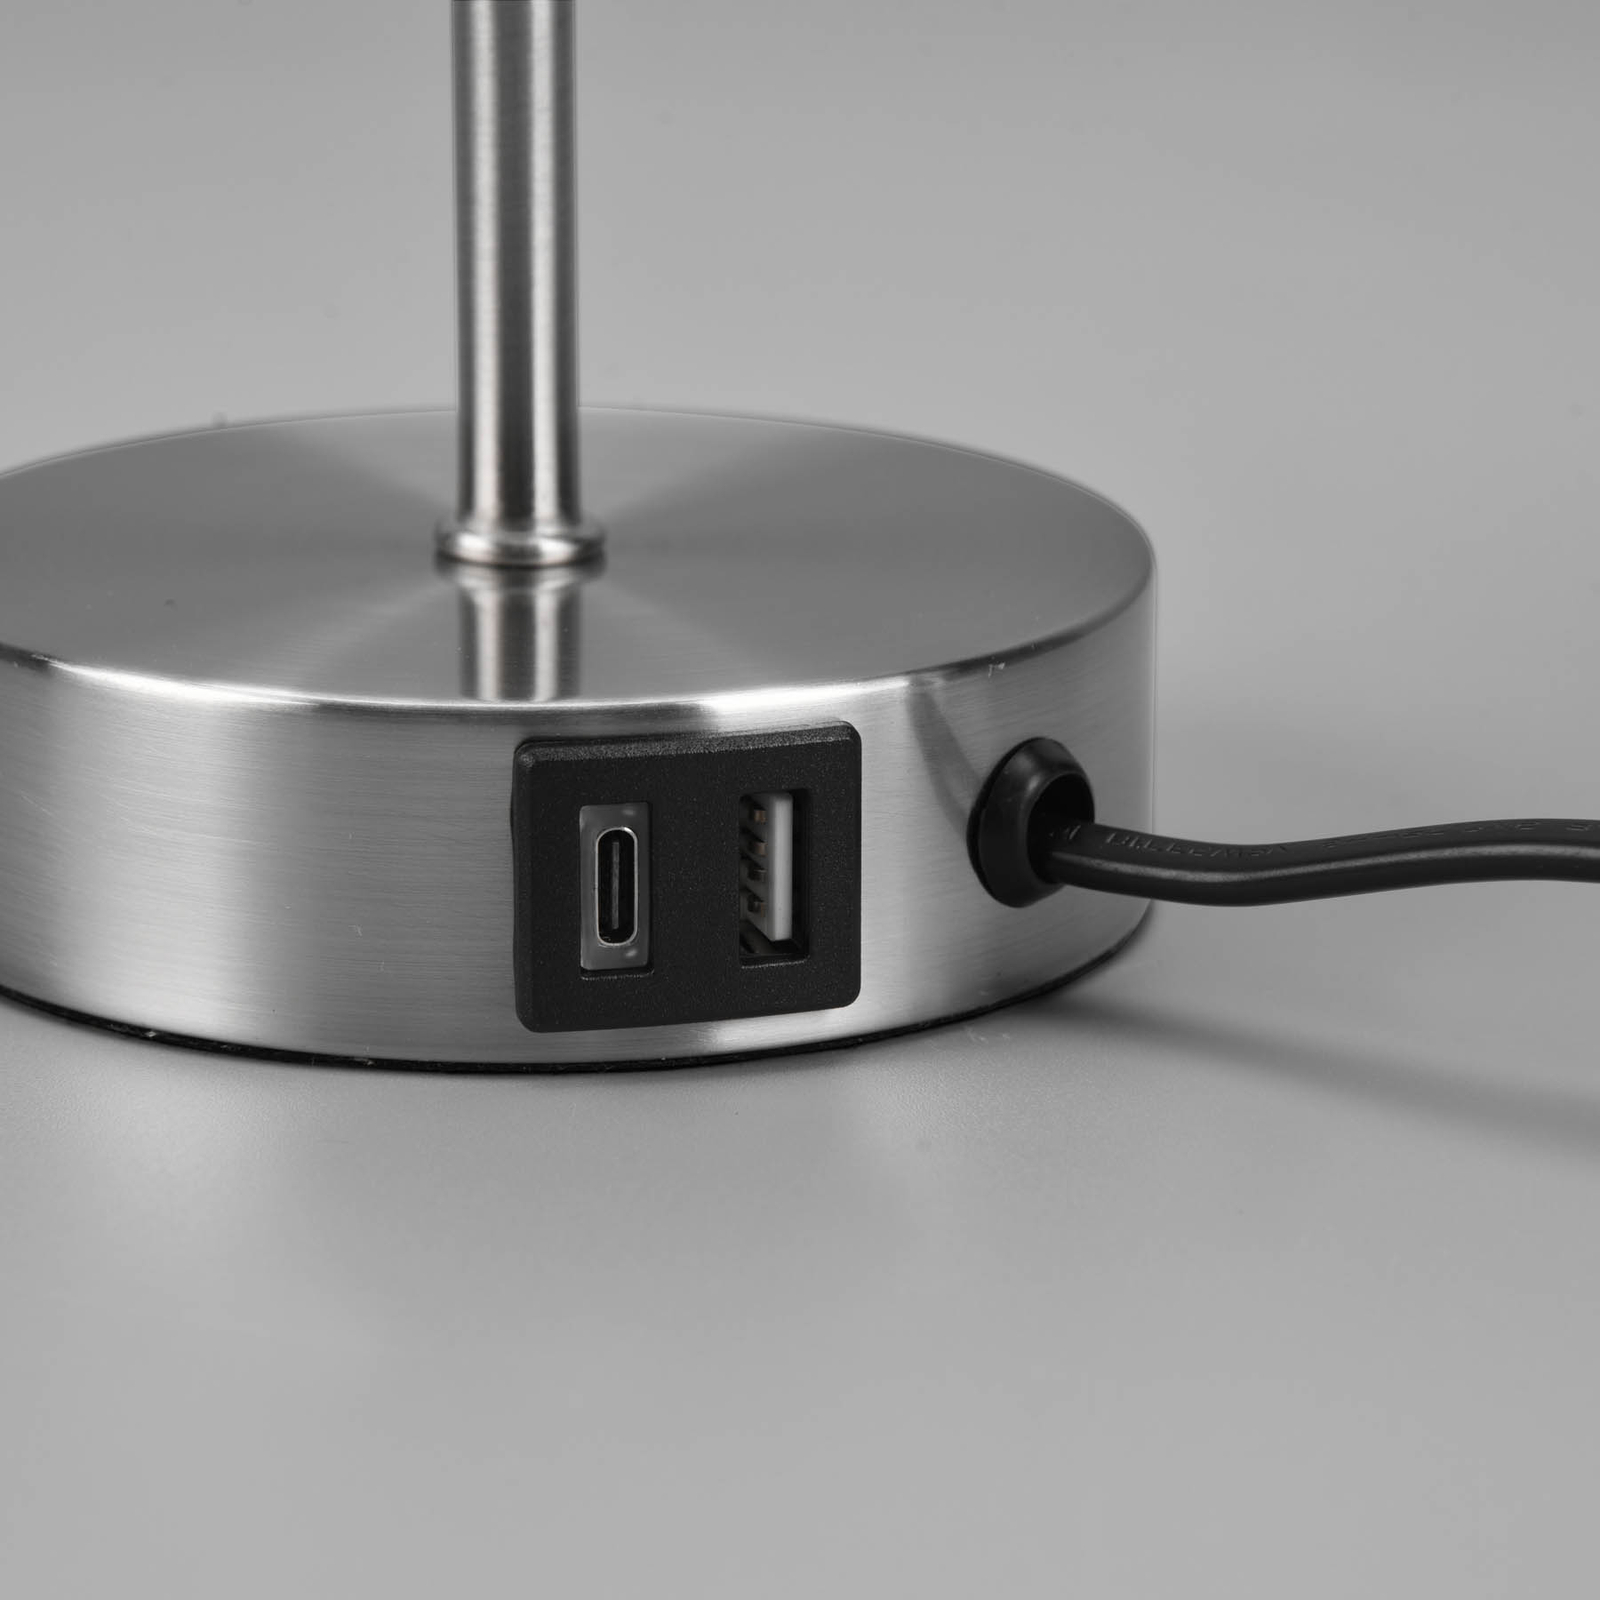 Tafellamp Jaro met USB-aansluiting, wit/nikkel